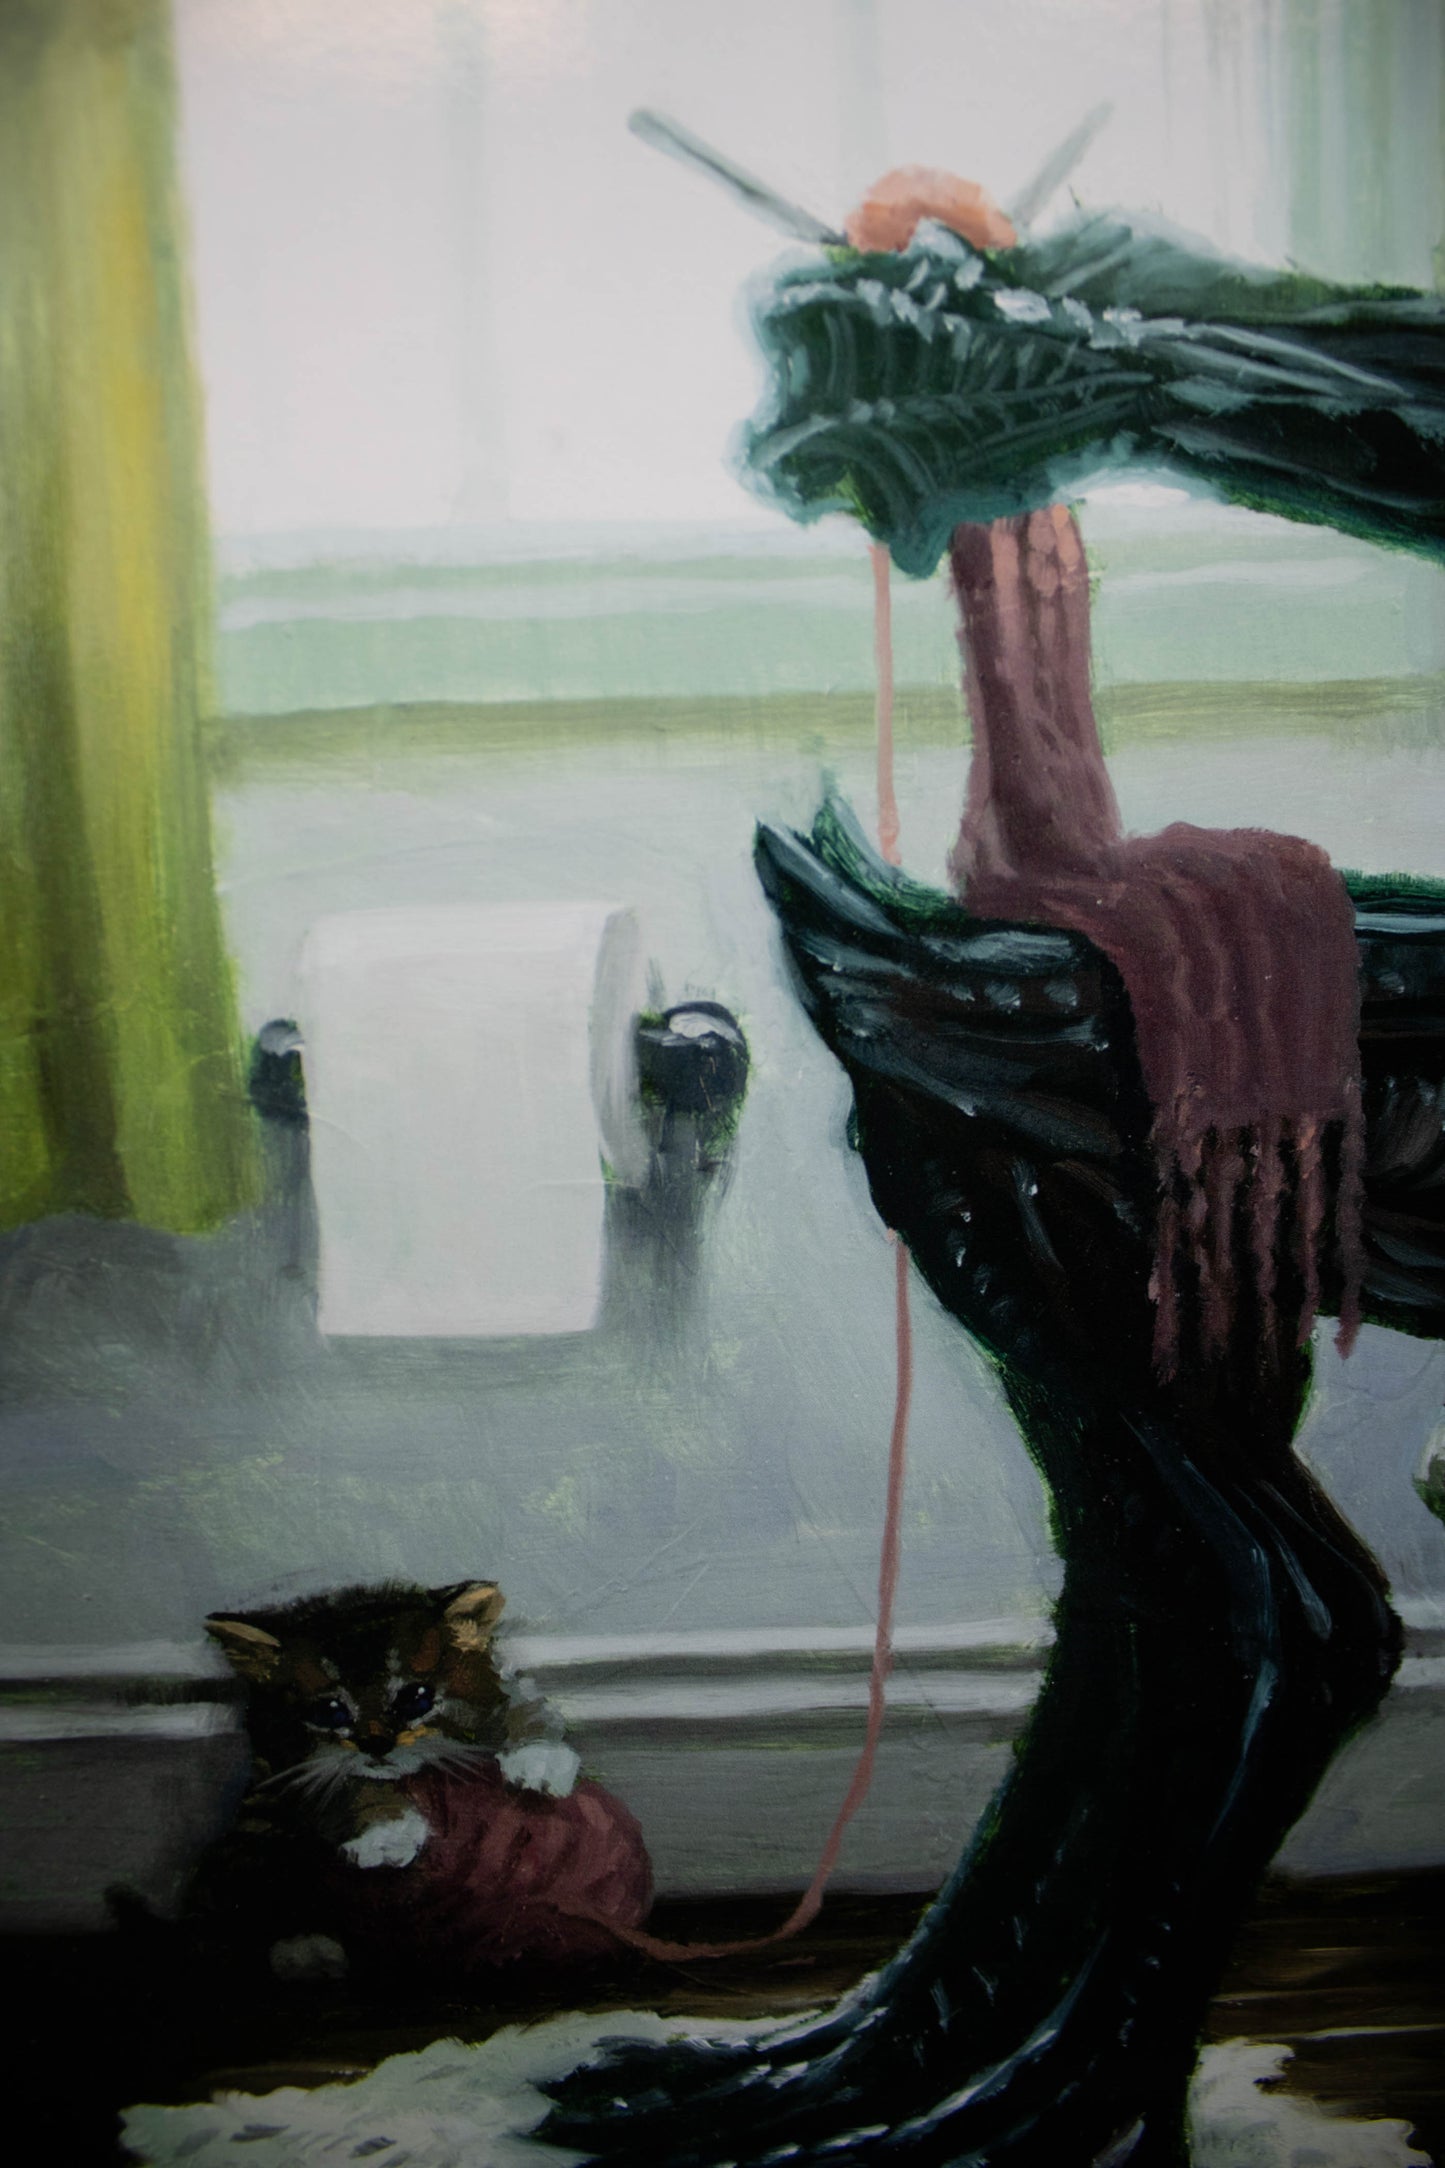 Load image into Gallery viewer, Xenomorph Alien Bathroom Parody Art Print
